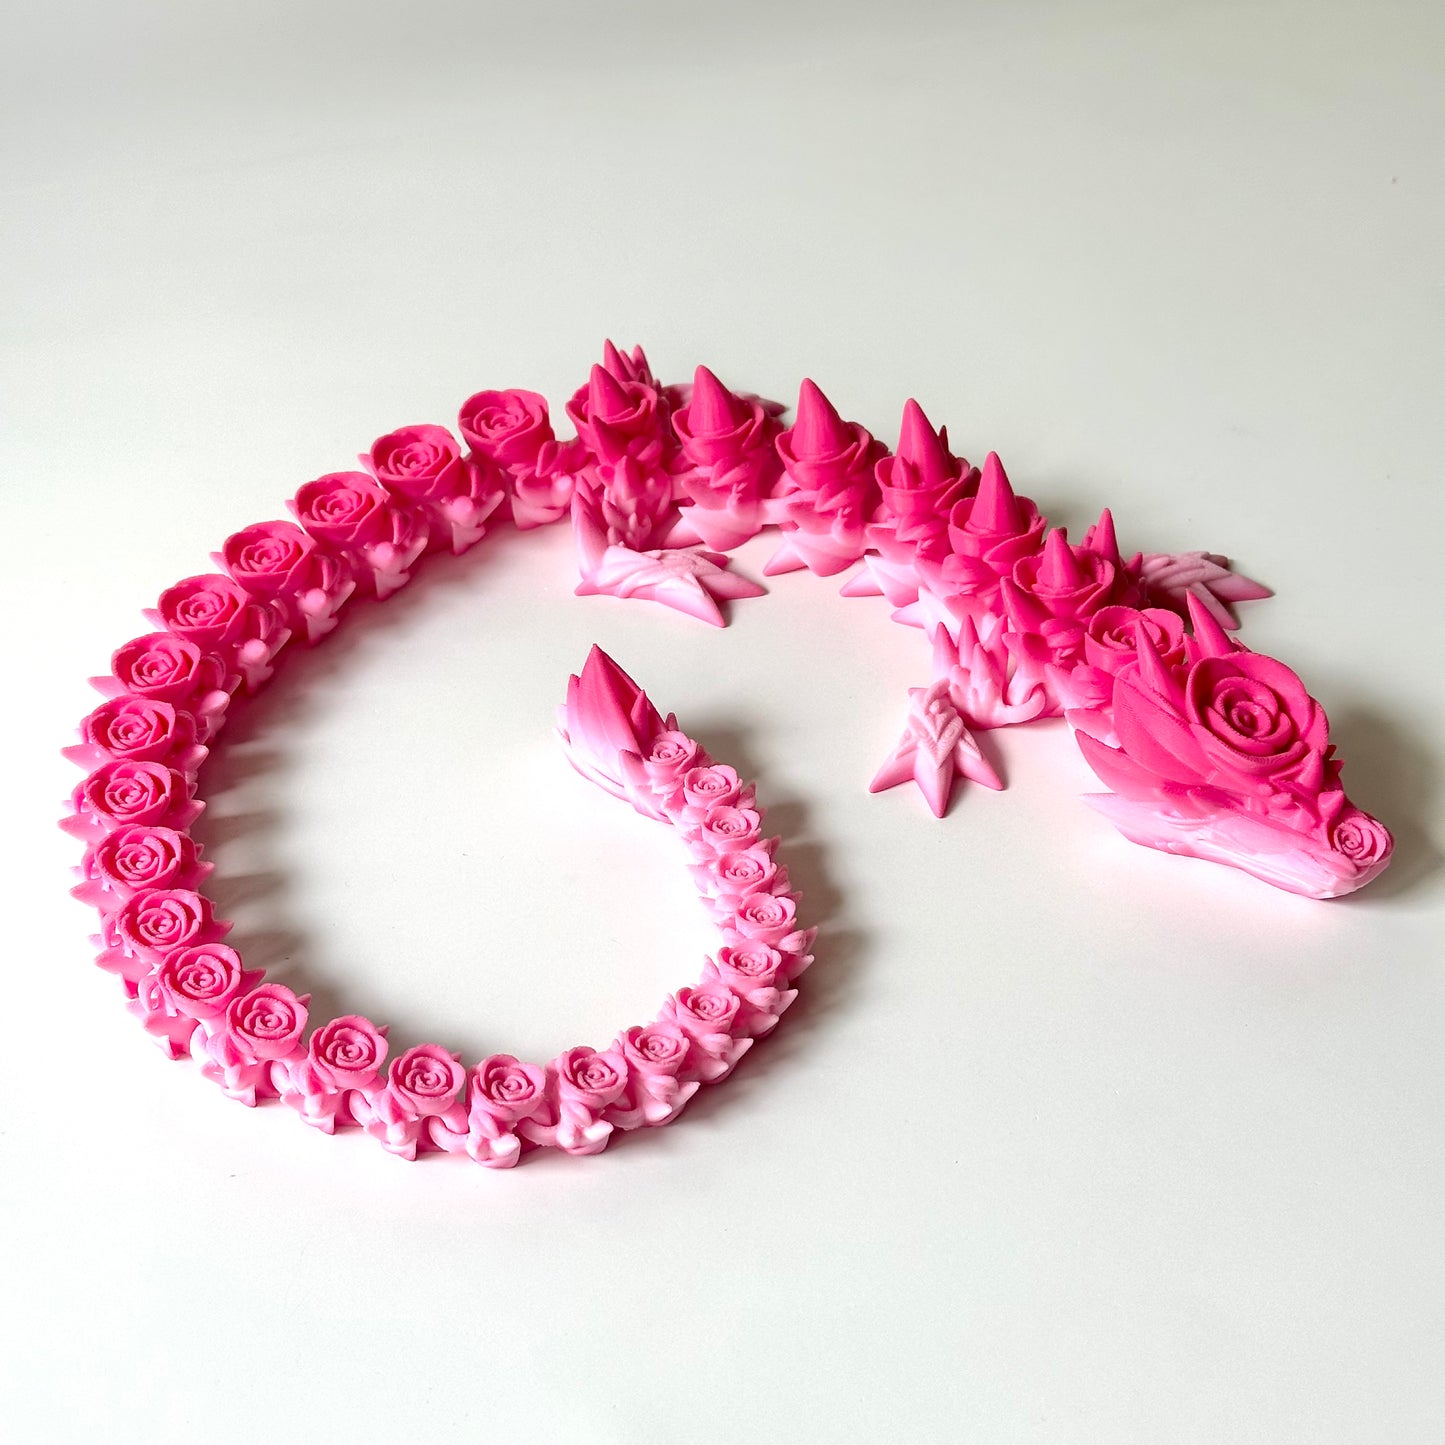 Large Rose Dragon - 3D Printed Articulating